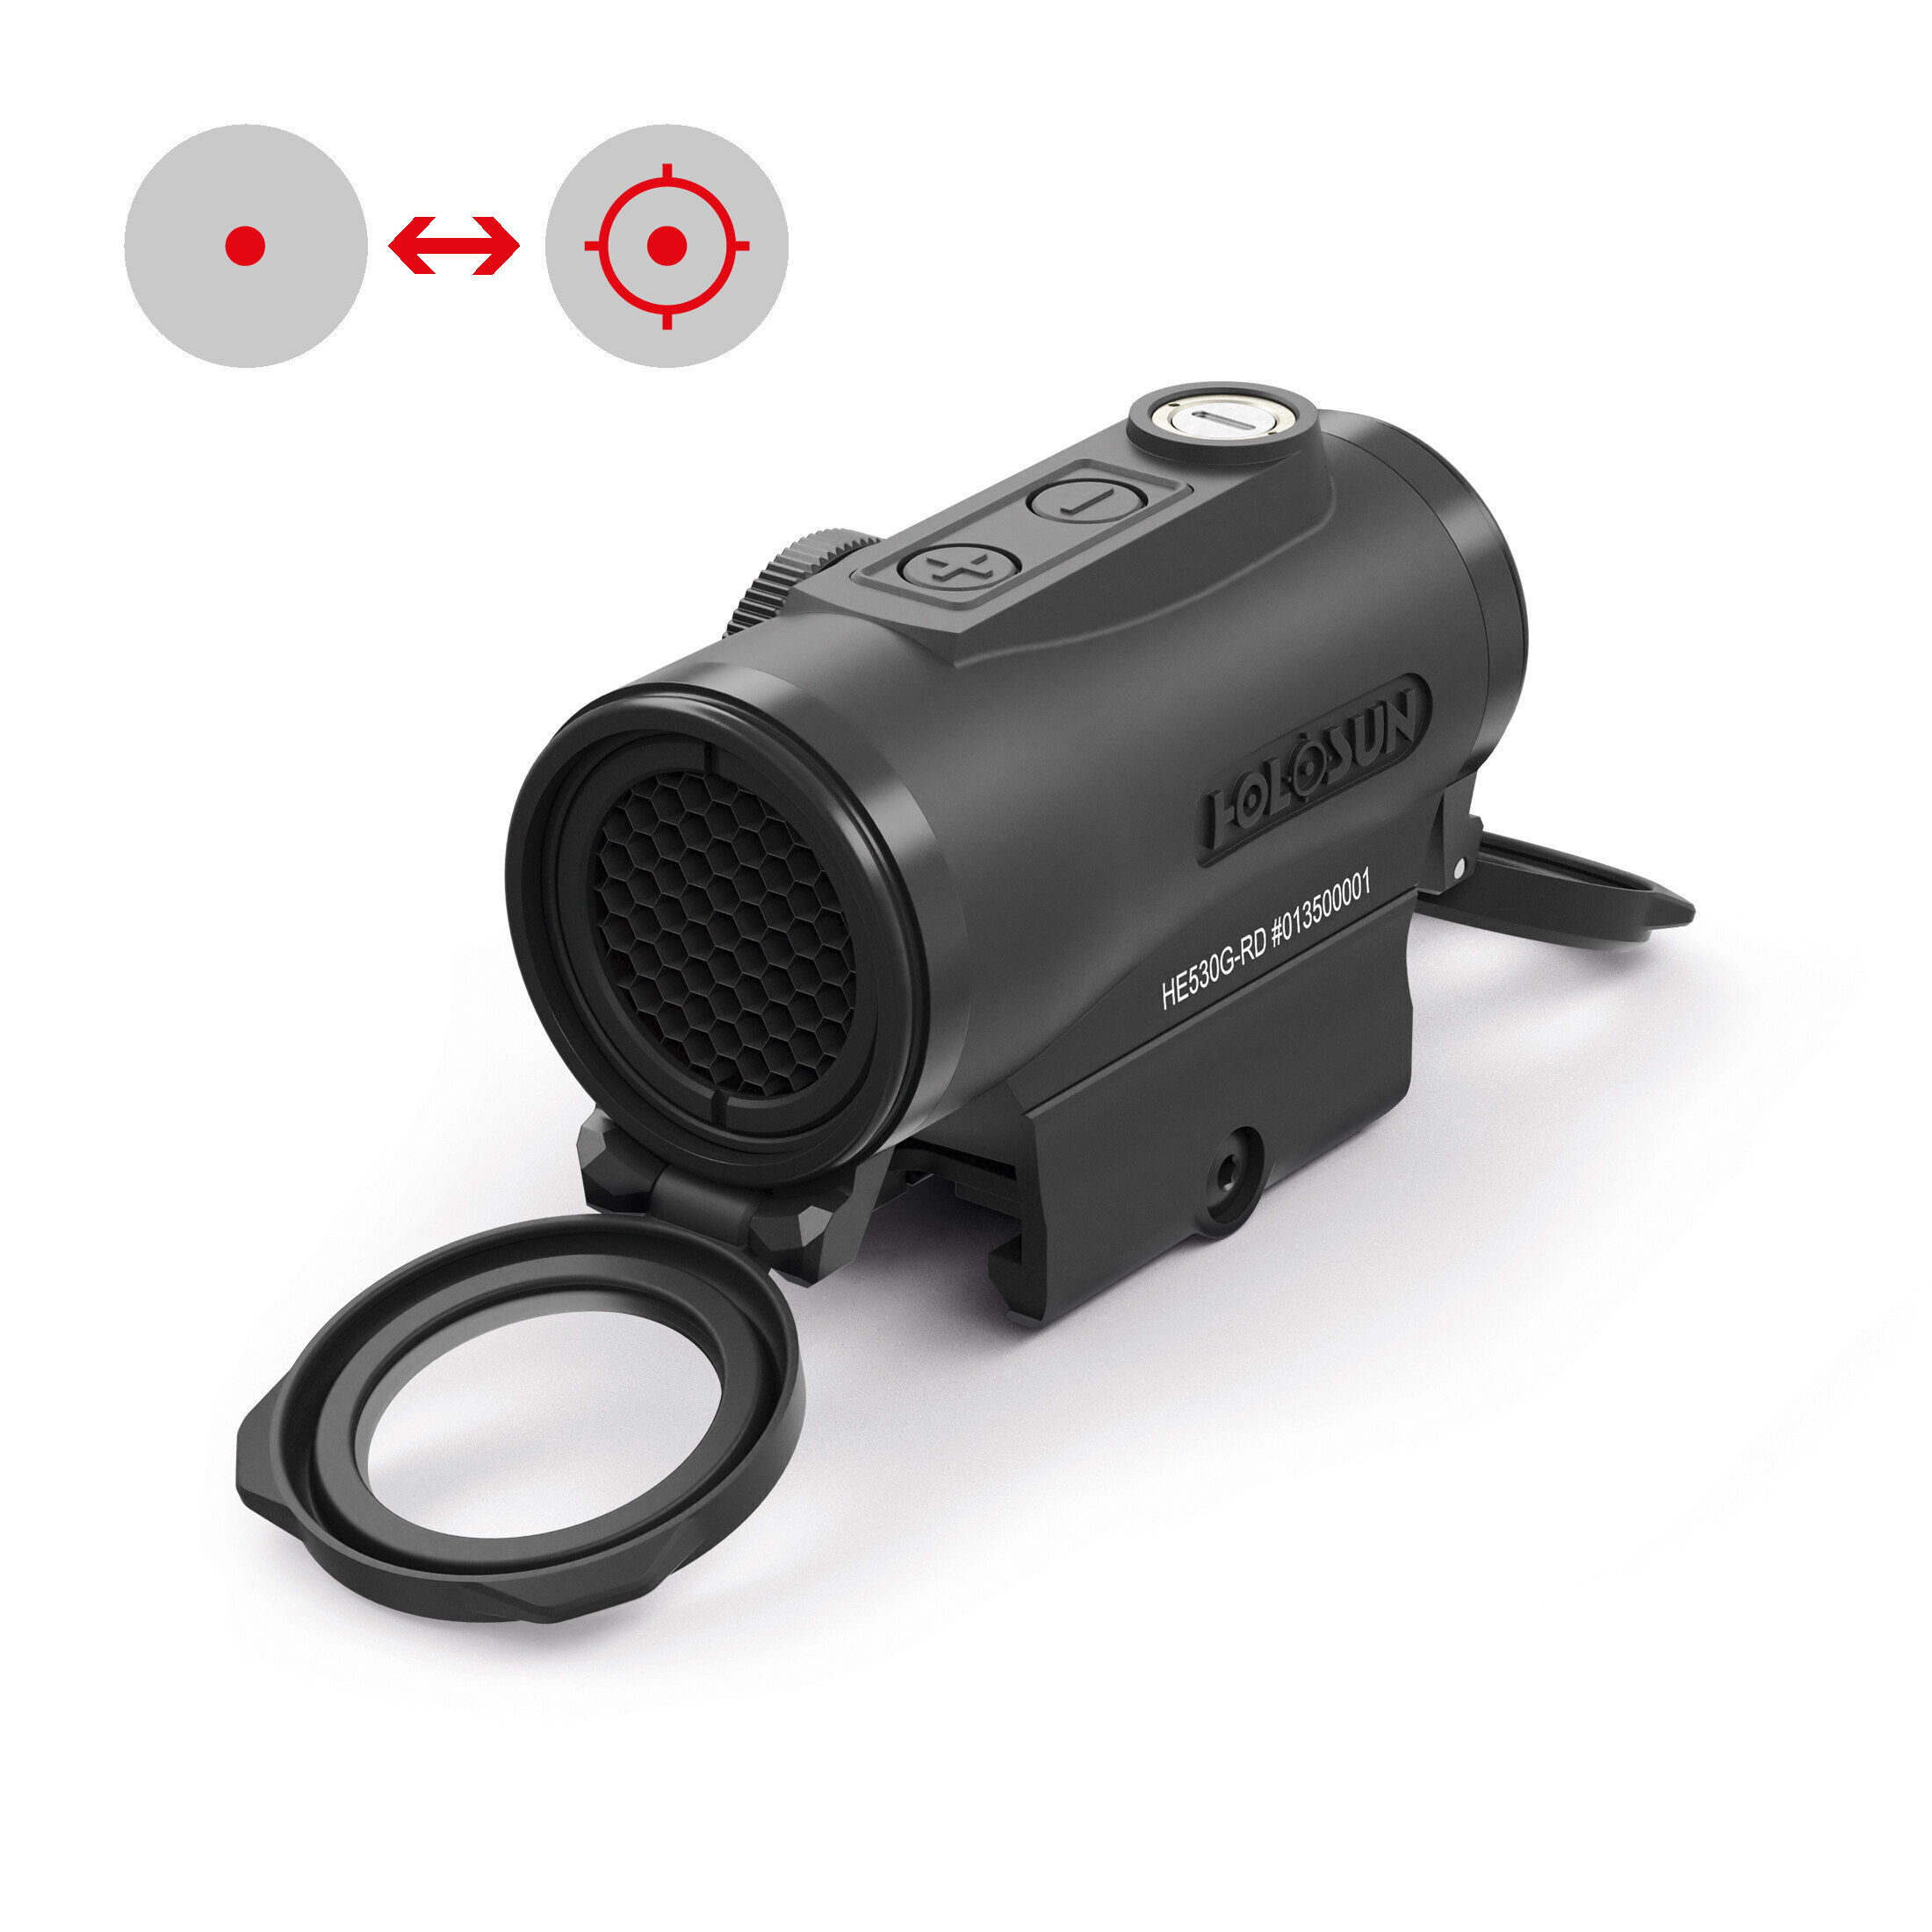 Holosun ELITE HE530G-RD Micro-viseur Point rouge Viseur Reflex Cercle avec point, Viseur Reflex, Ré…